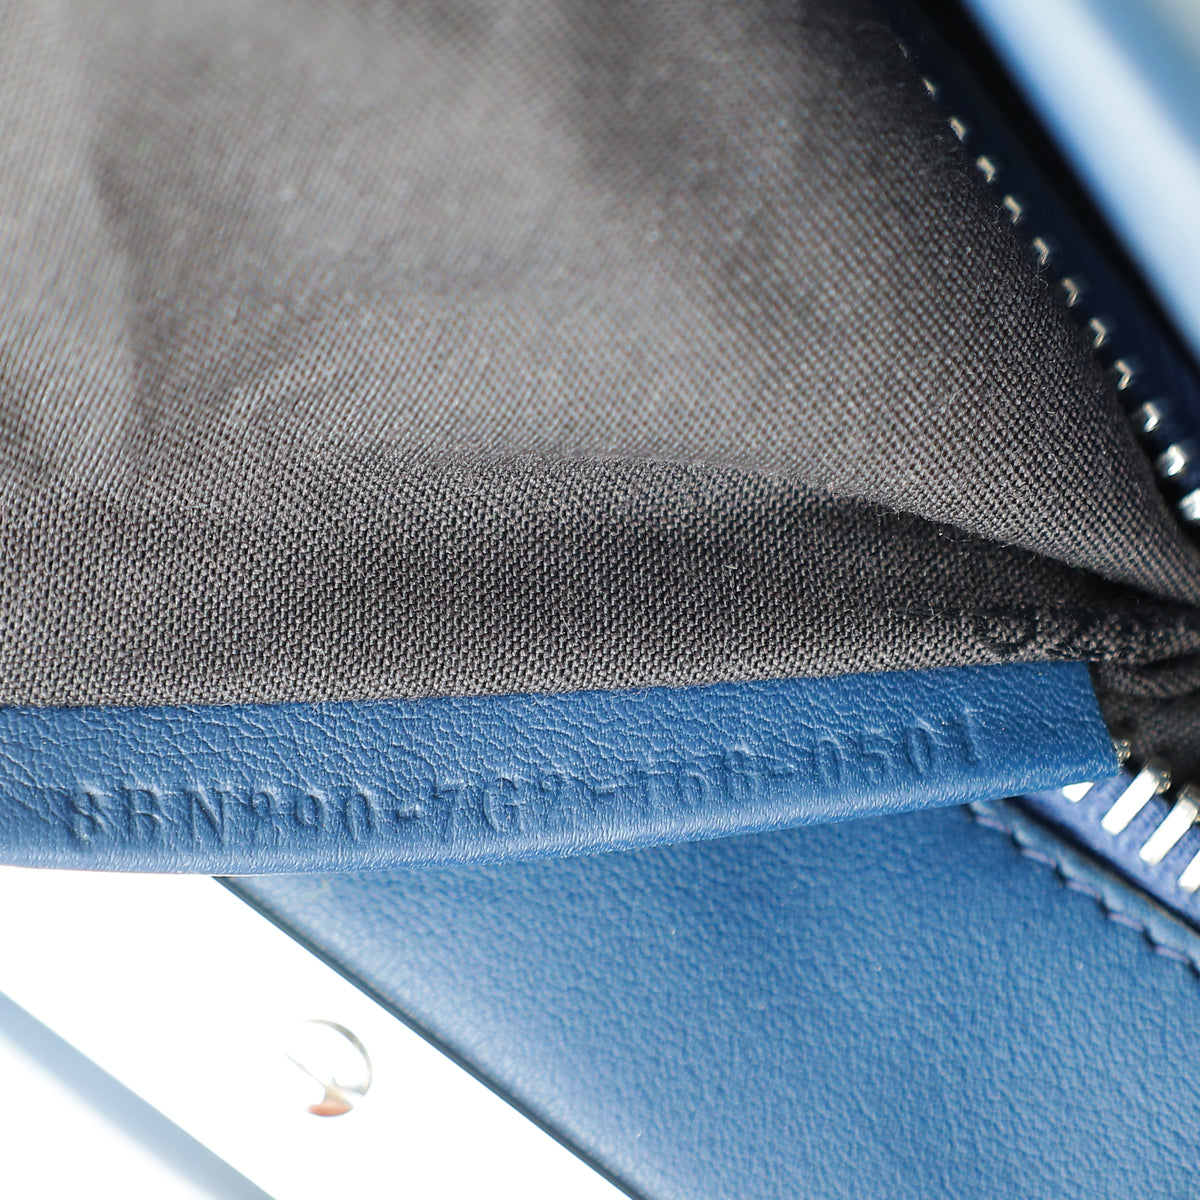 Fendi Navy Blue Whipstitch Peekaboo Regular Bag